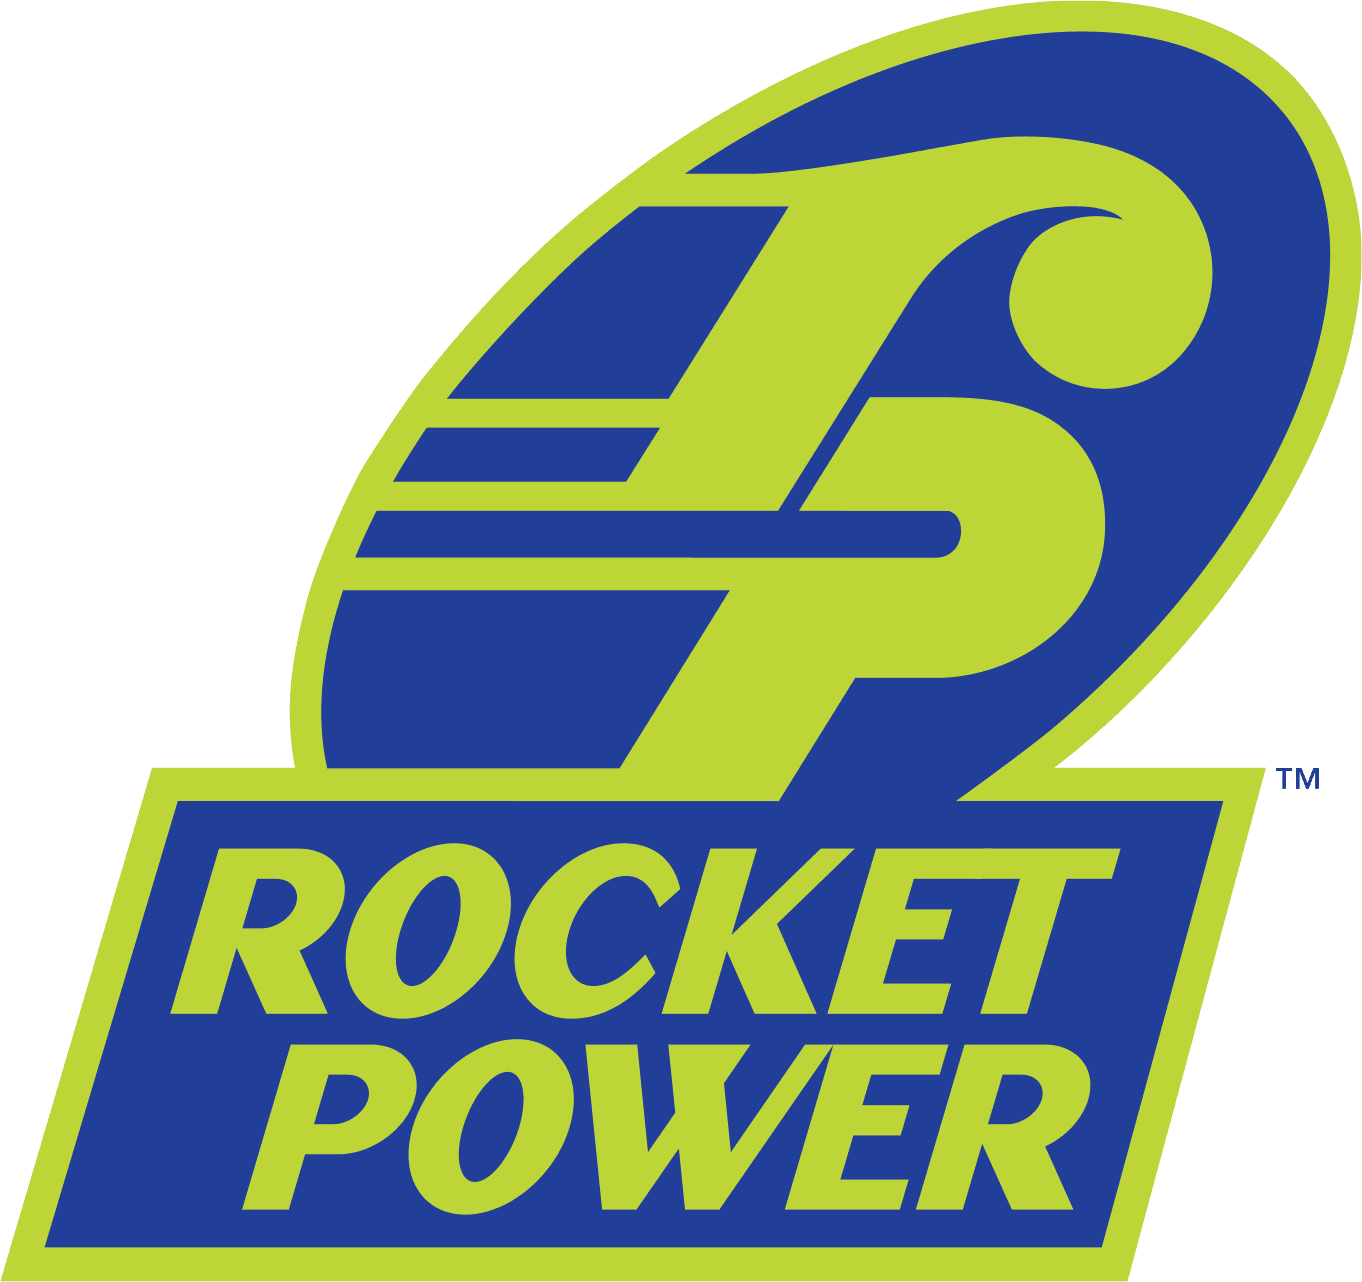 Rocket Power logo